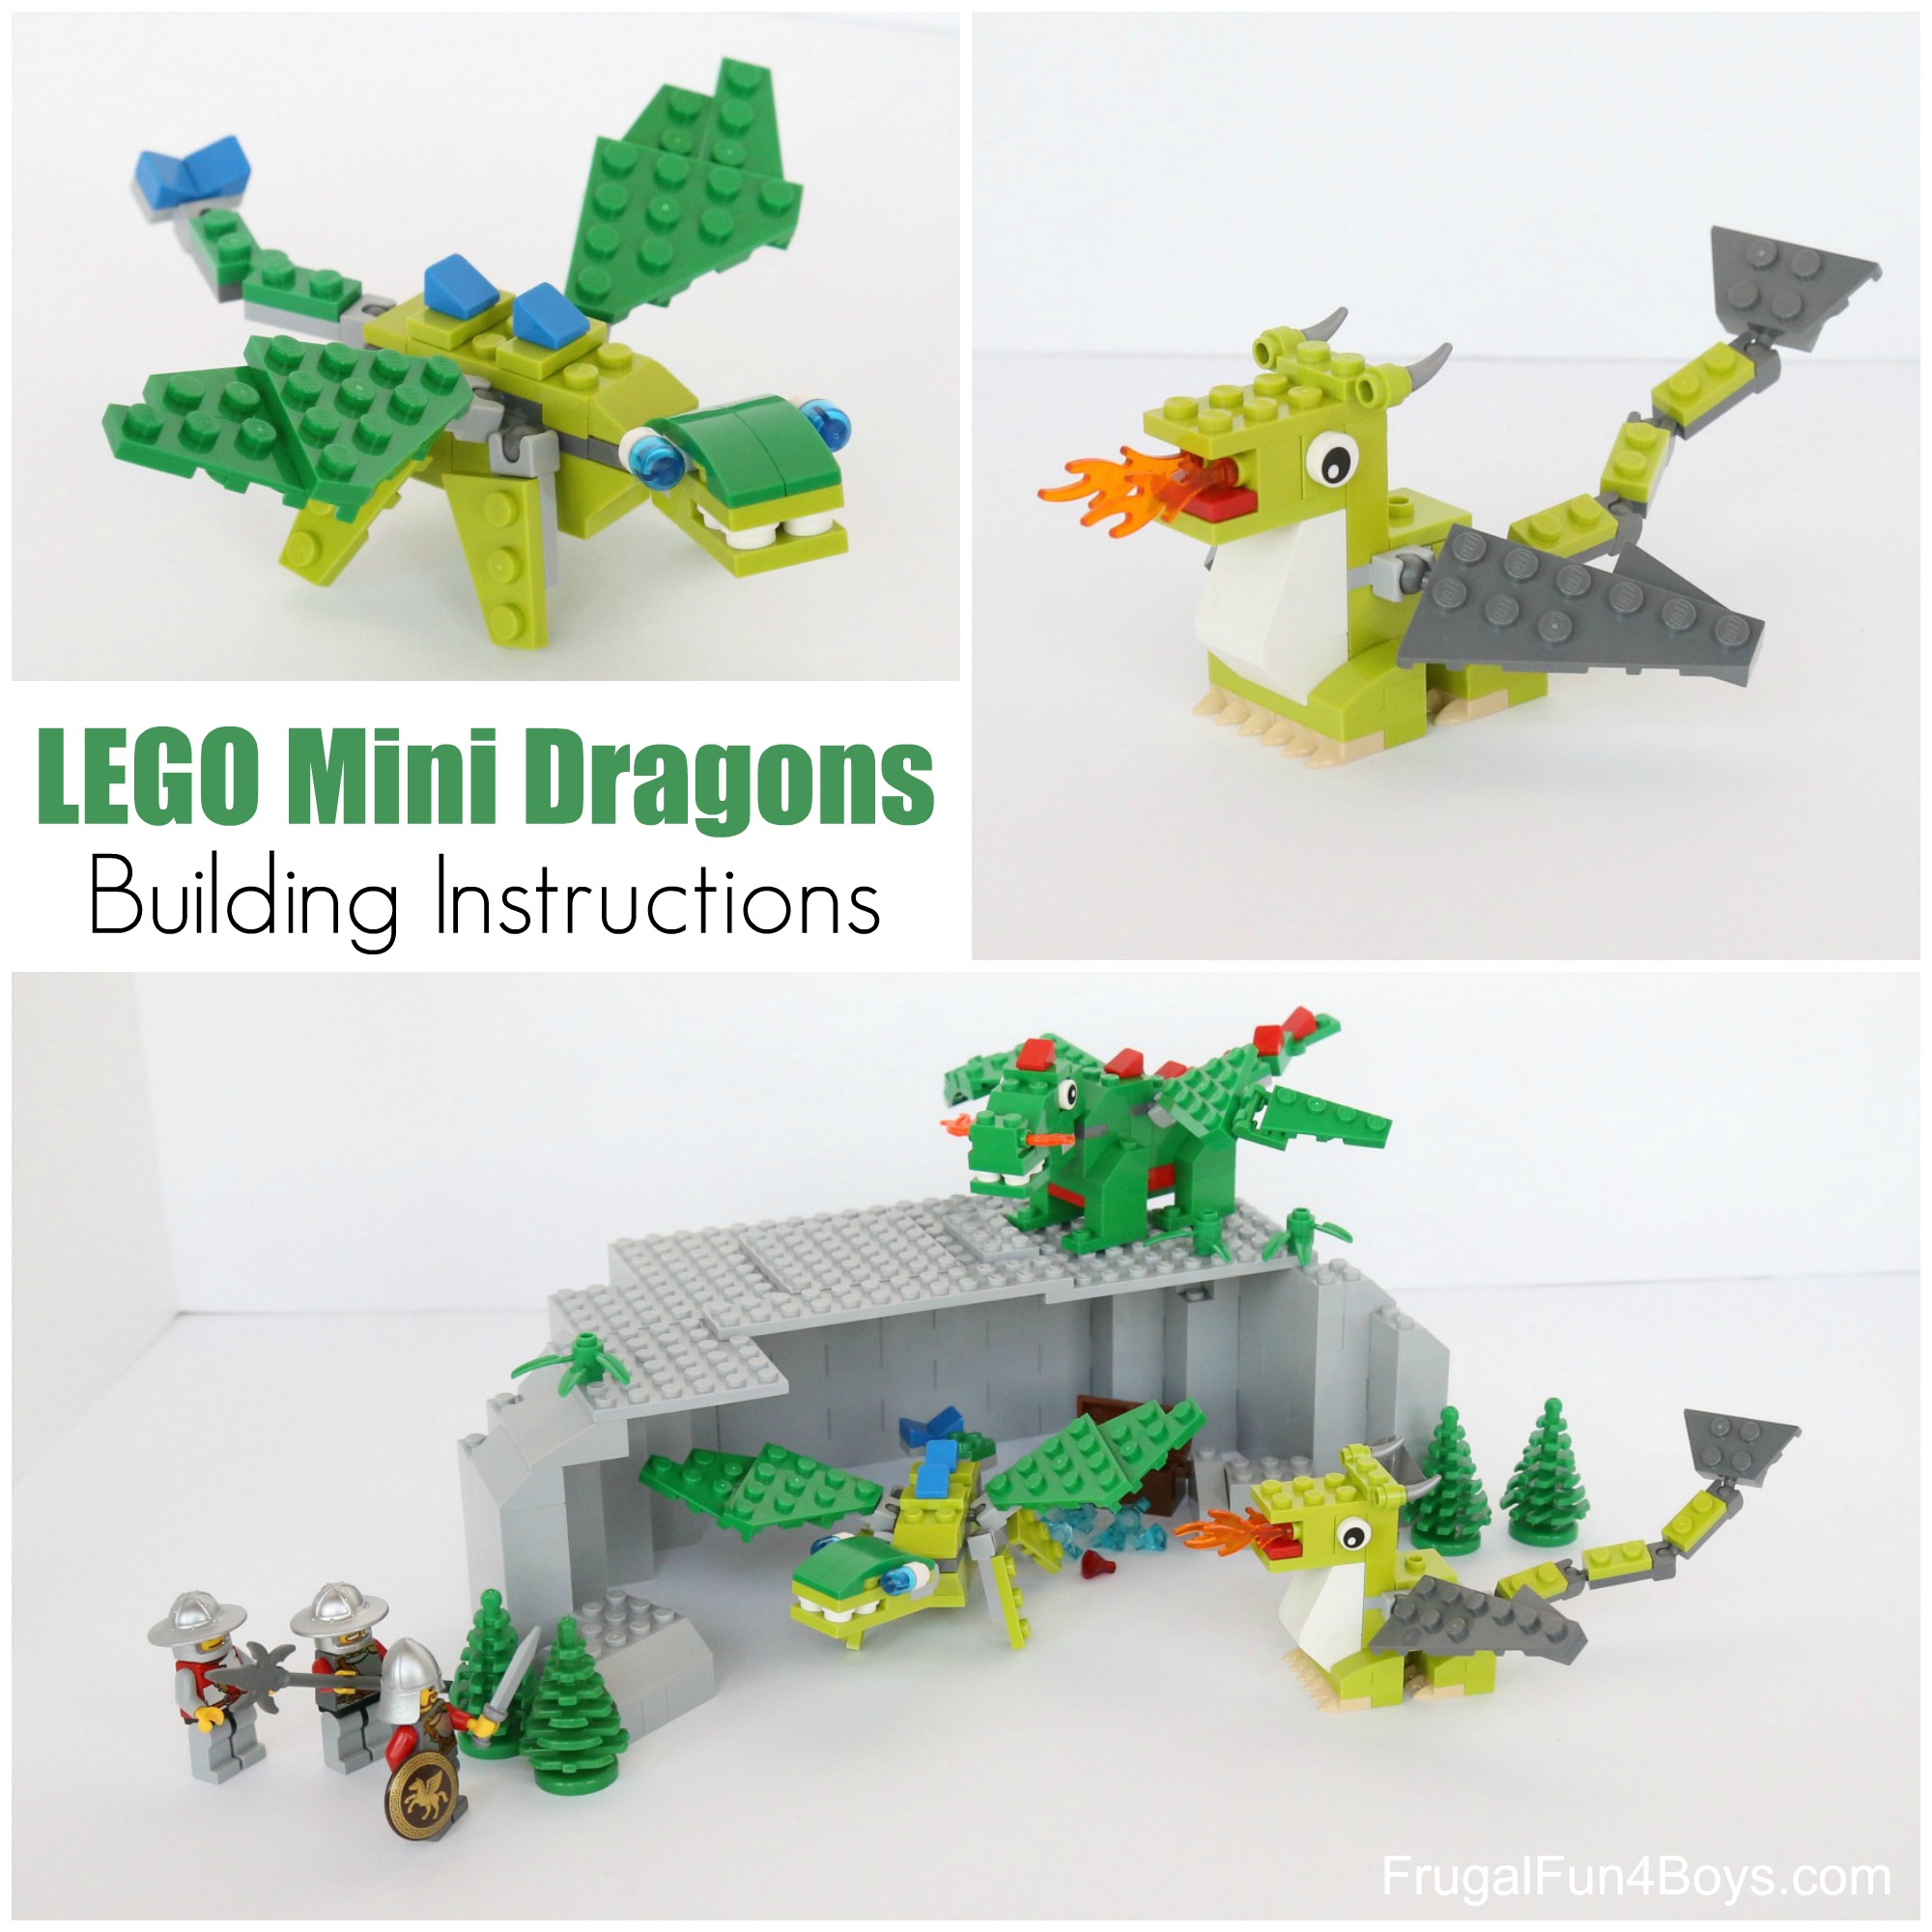 LEGO Mini Dragons Building Instructions